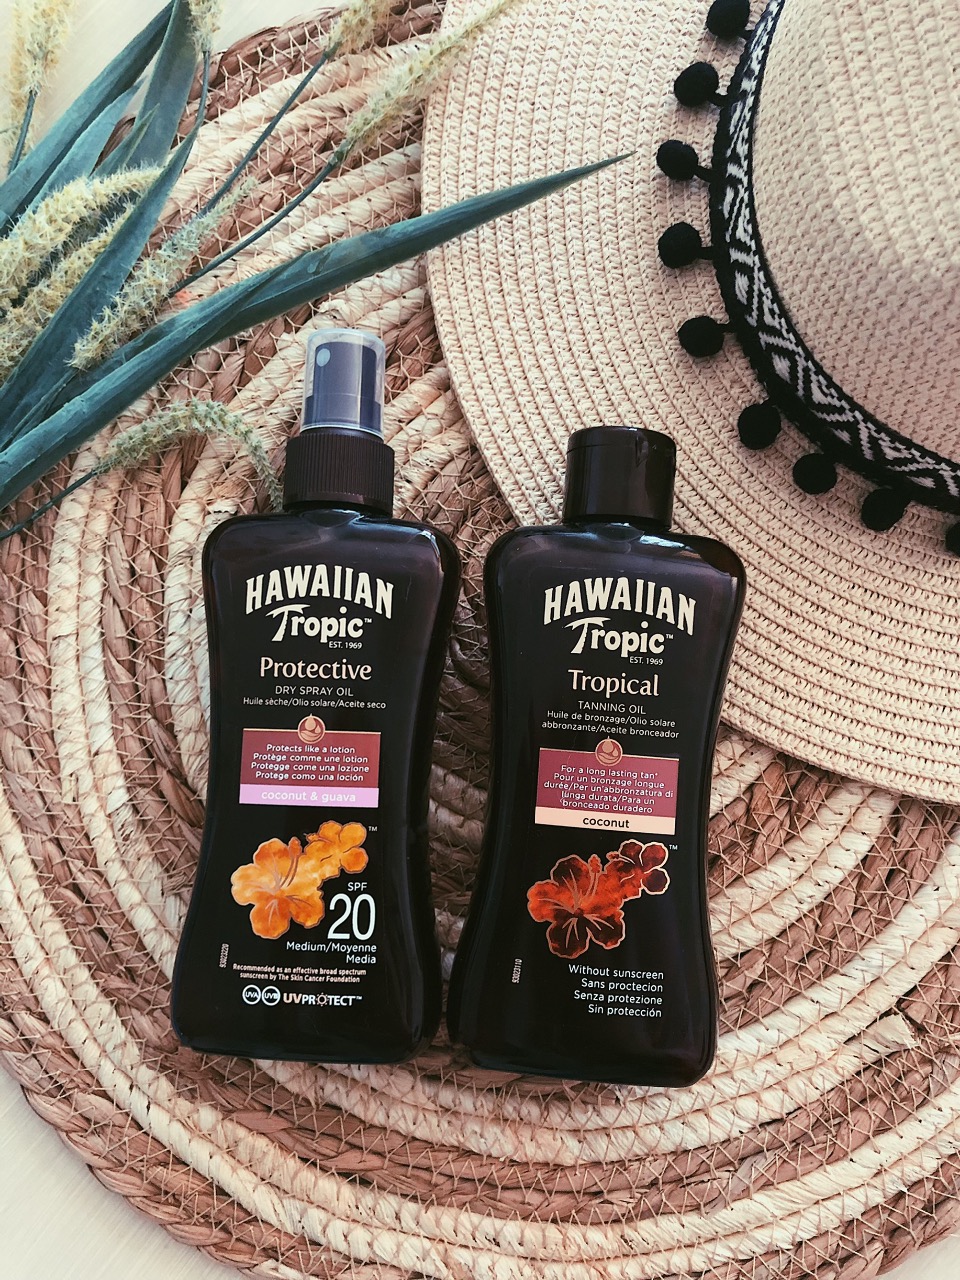 Hawaiian Tropic zonolie tanning oil